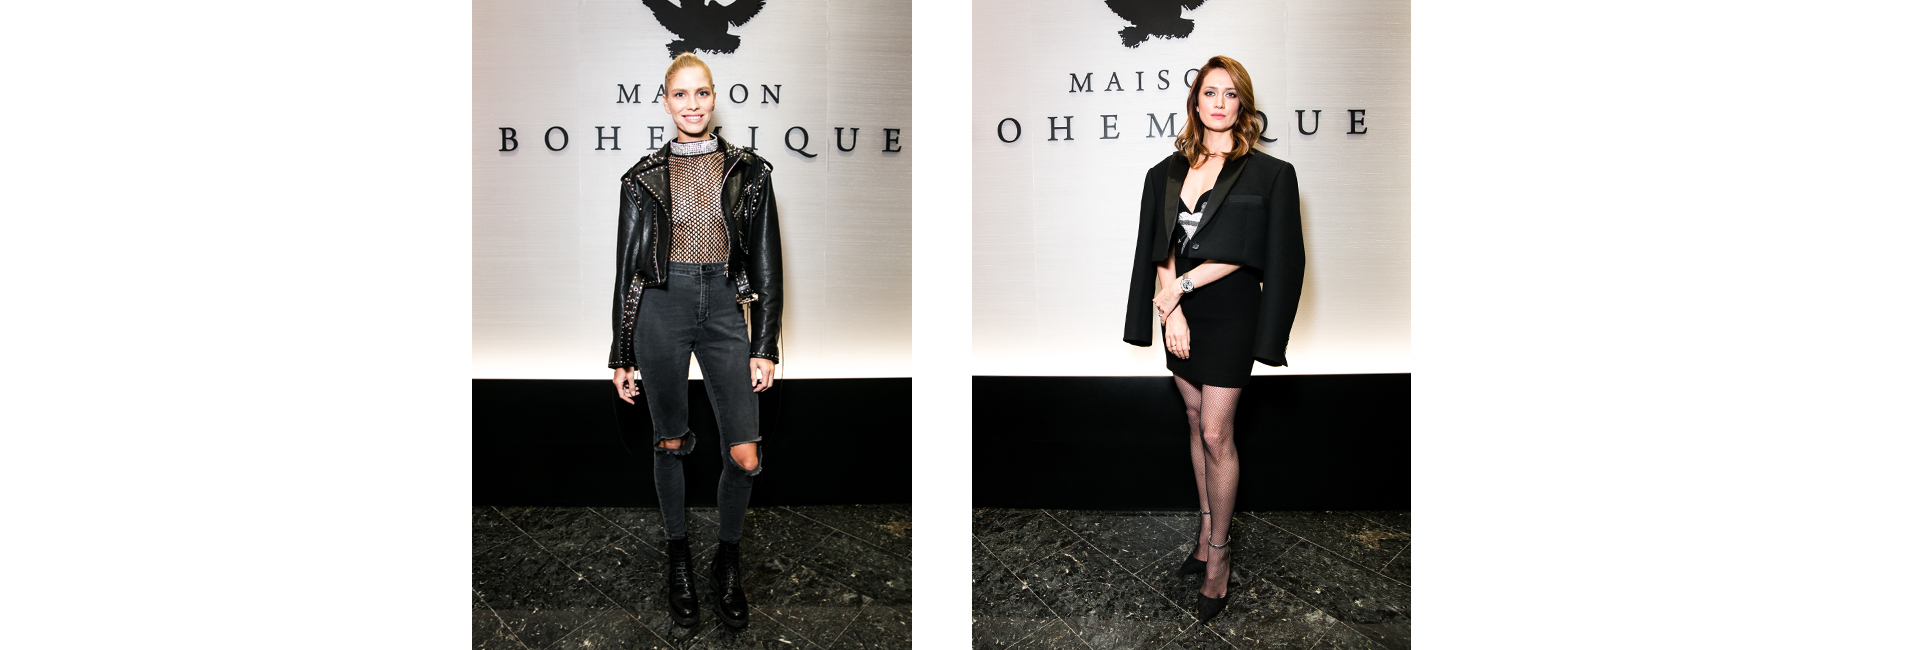 Maison Bohemique представил новую коллекцию Demi Couture (фото 1)